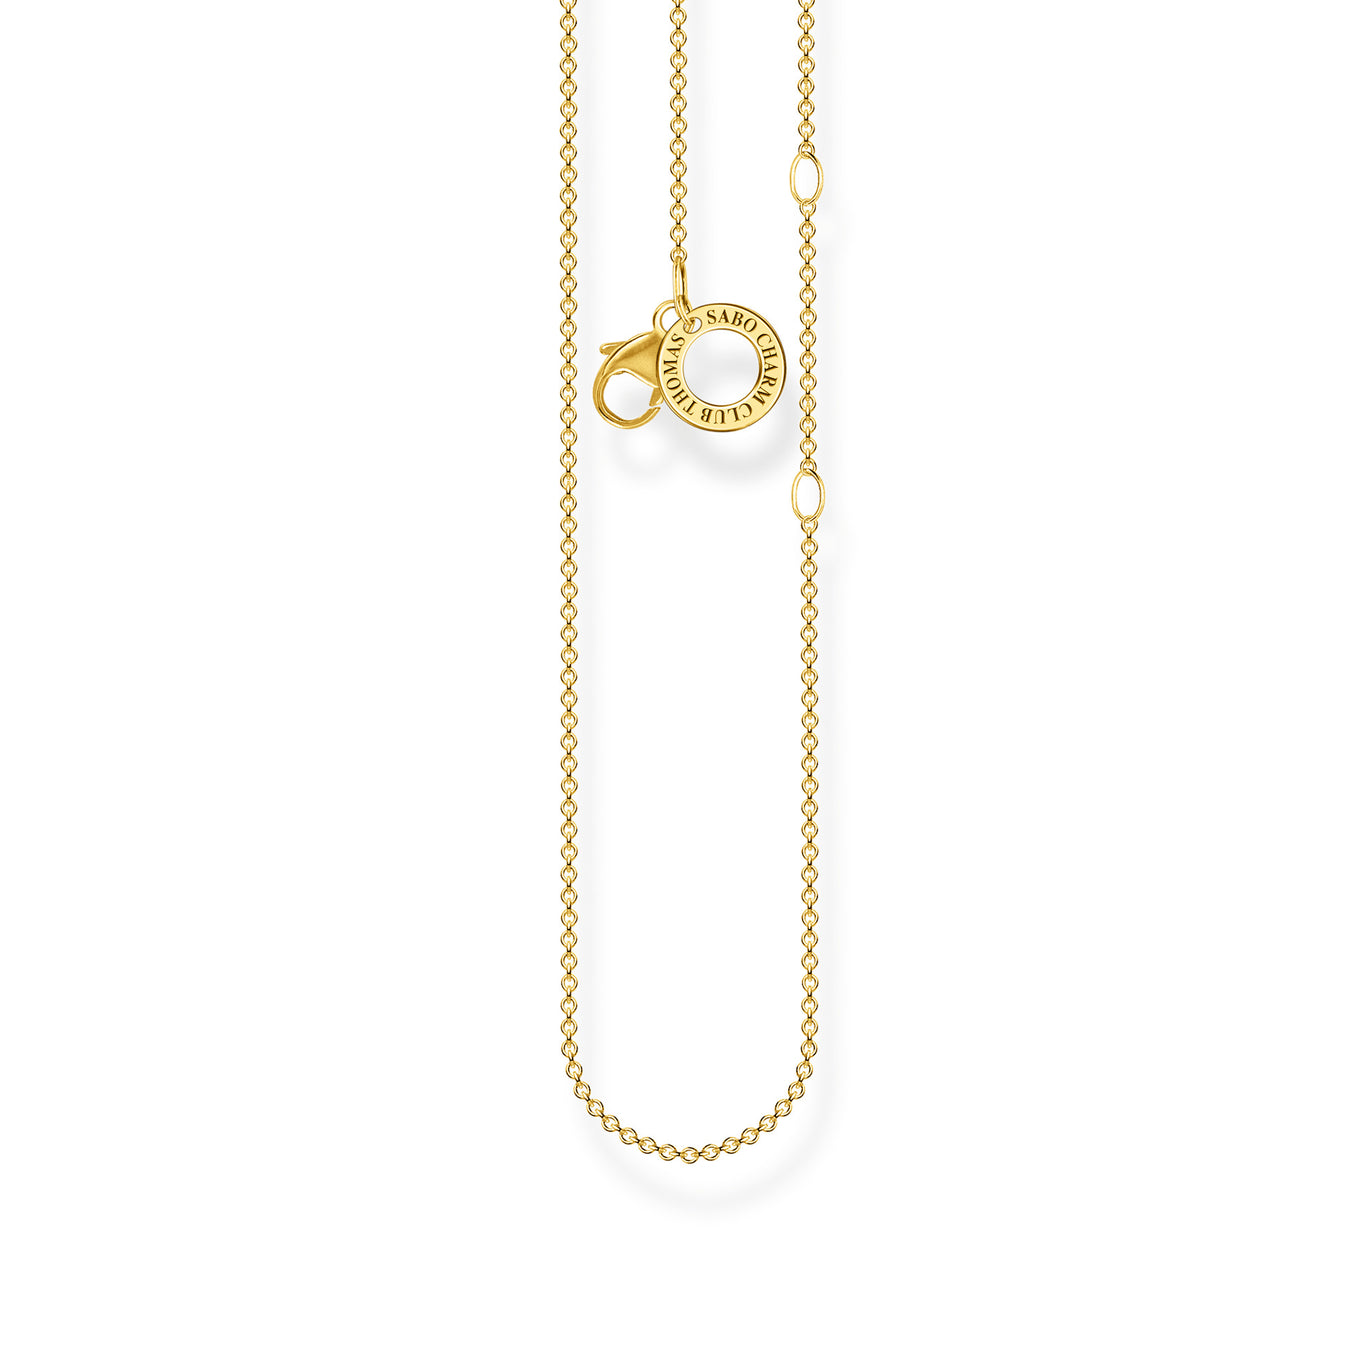 Thomas Sabo Gold Charm Necklace